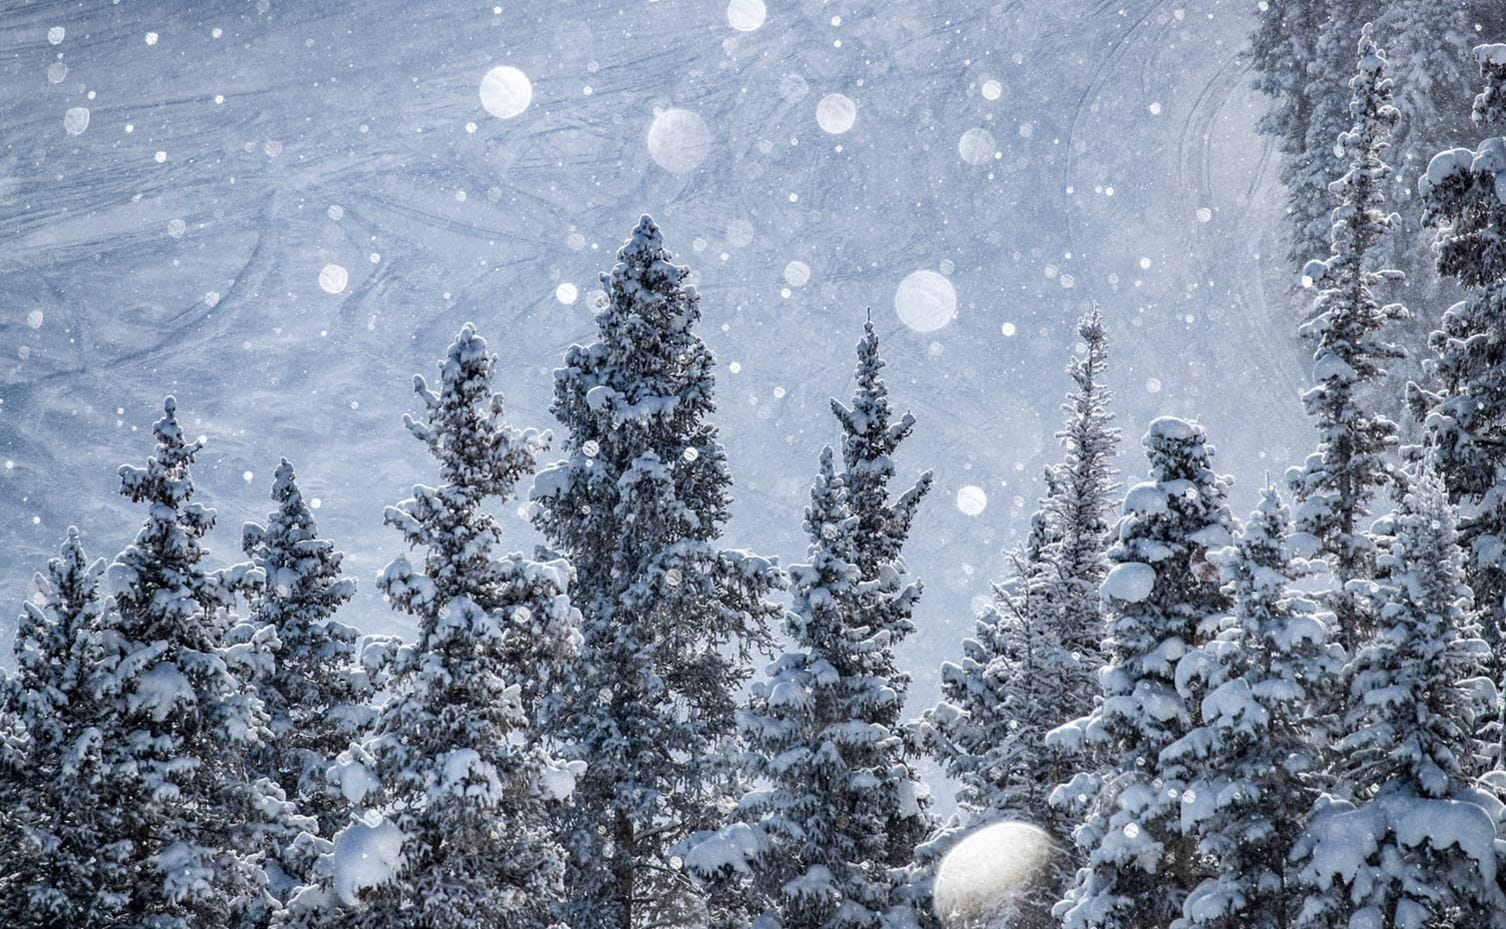 Snowflakes fall on pine trees near Aspen, Colorado